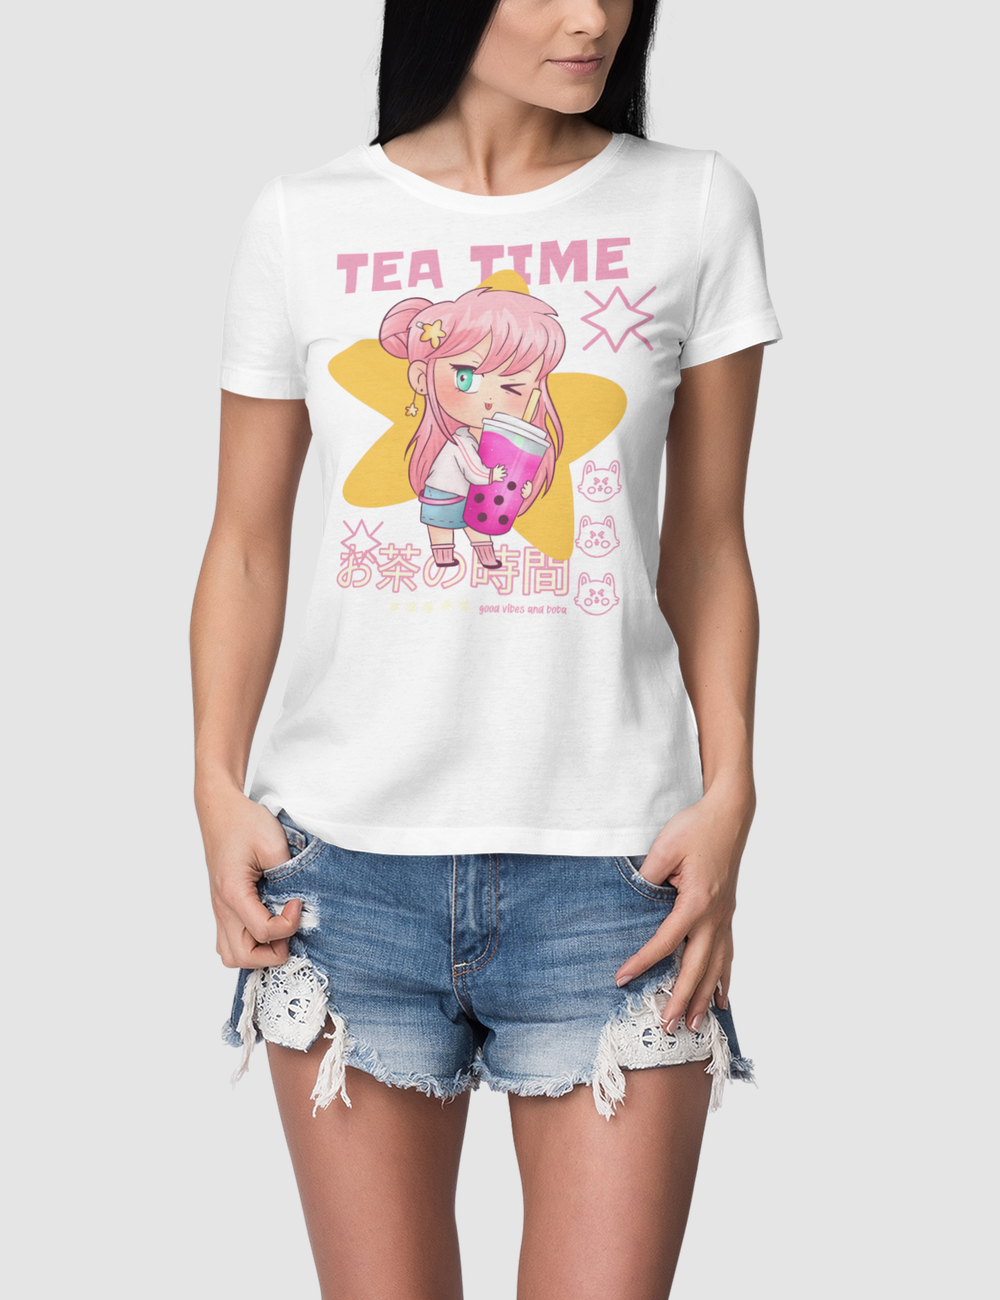 Boba Tea Time | Women's Fitted T-Shirt OniTakai